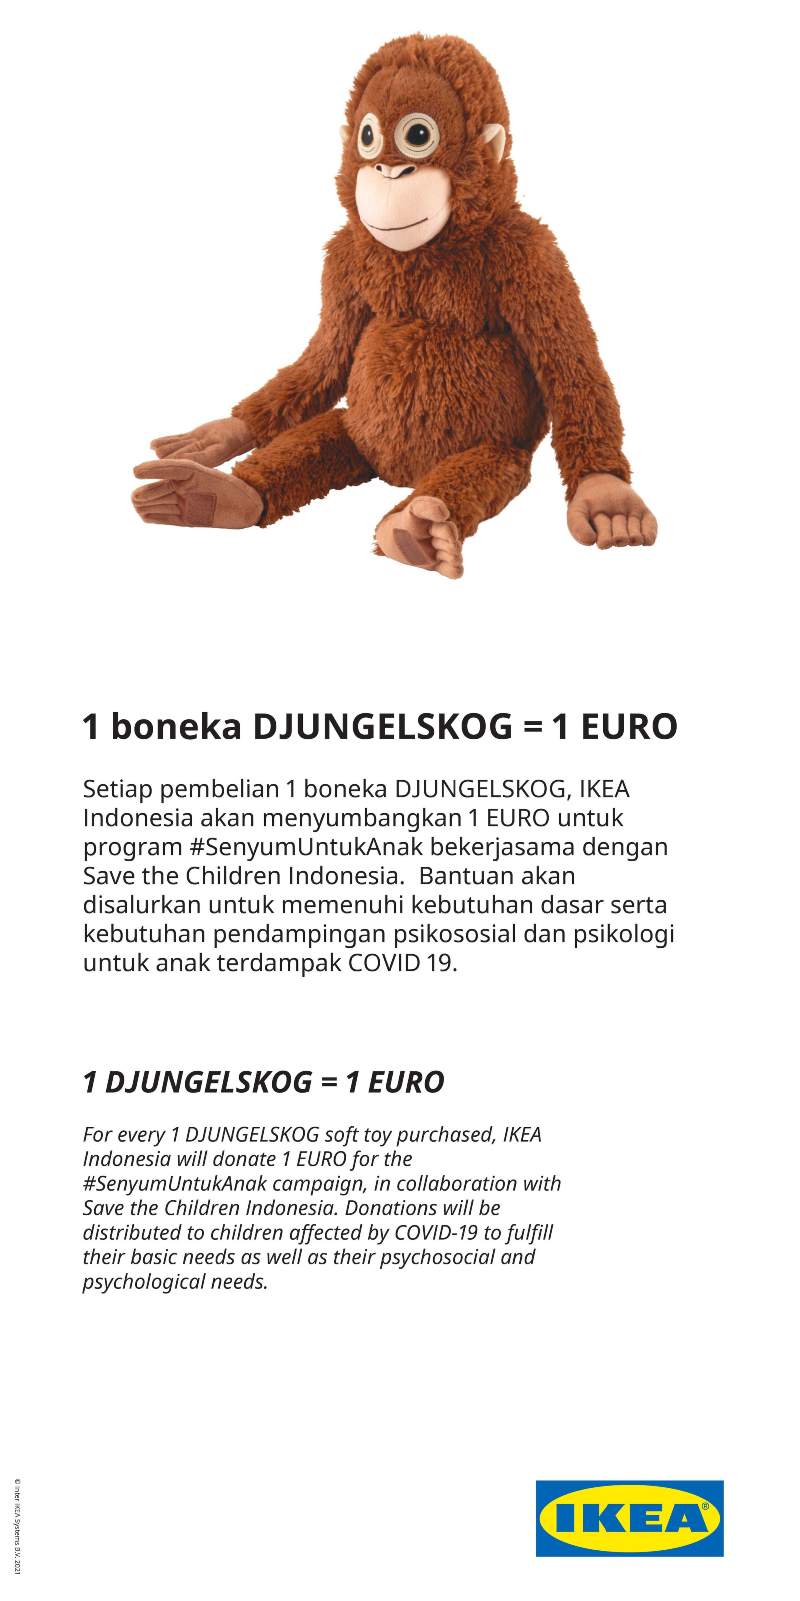 IKEA Indonesia Gencar Kampanyekan 